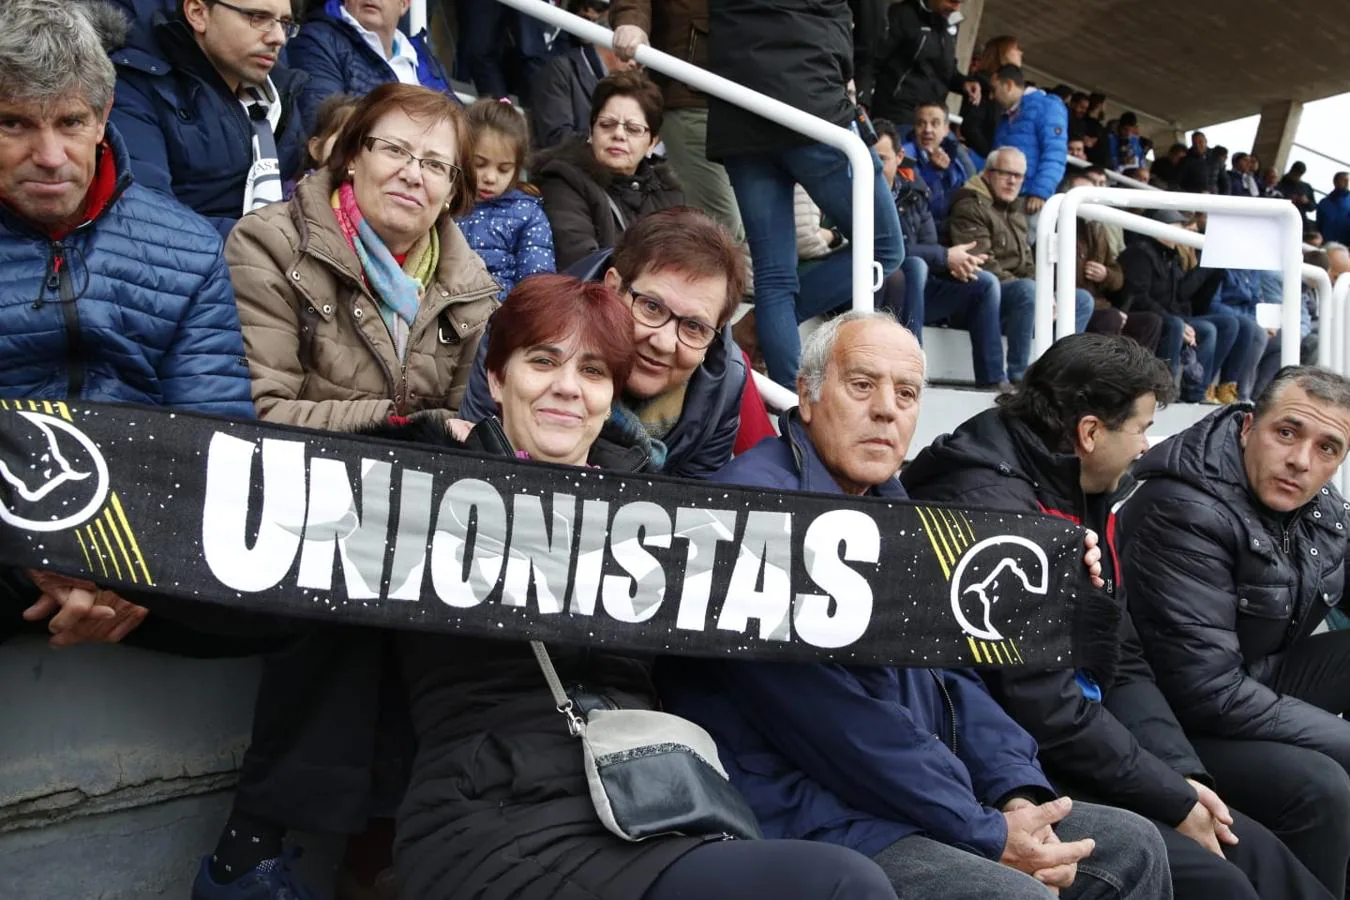 Fotos: Unionistas de Salamanca - Ponferradina